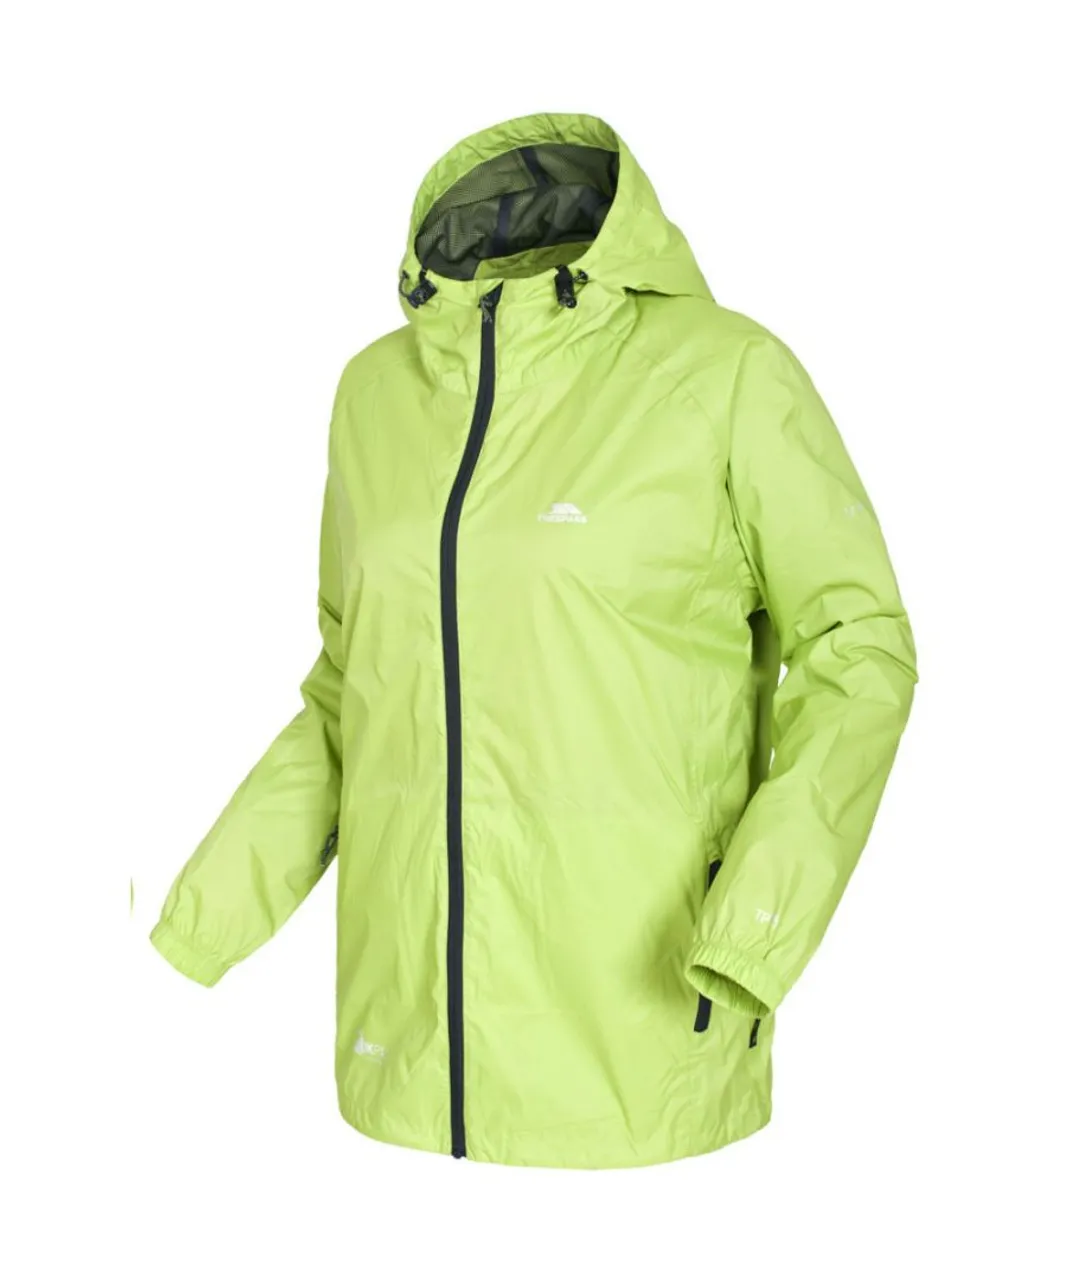 Trespass Boys Girls Qikpac Waterproof Breathable Packaway Jacket - Green